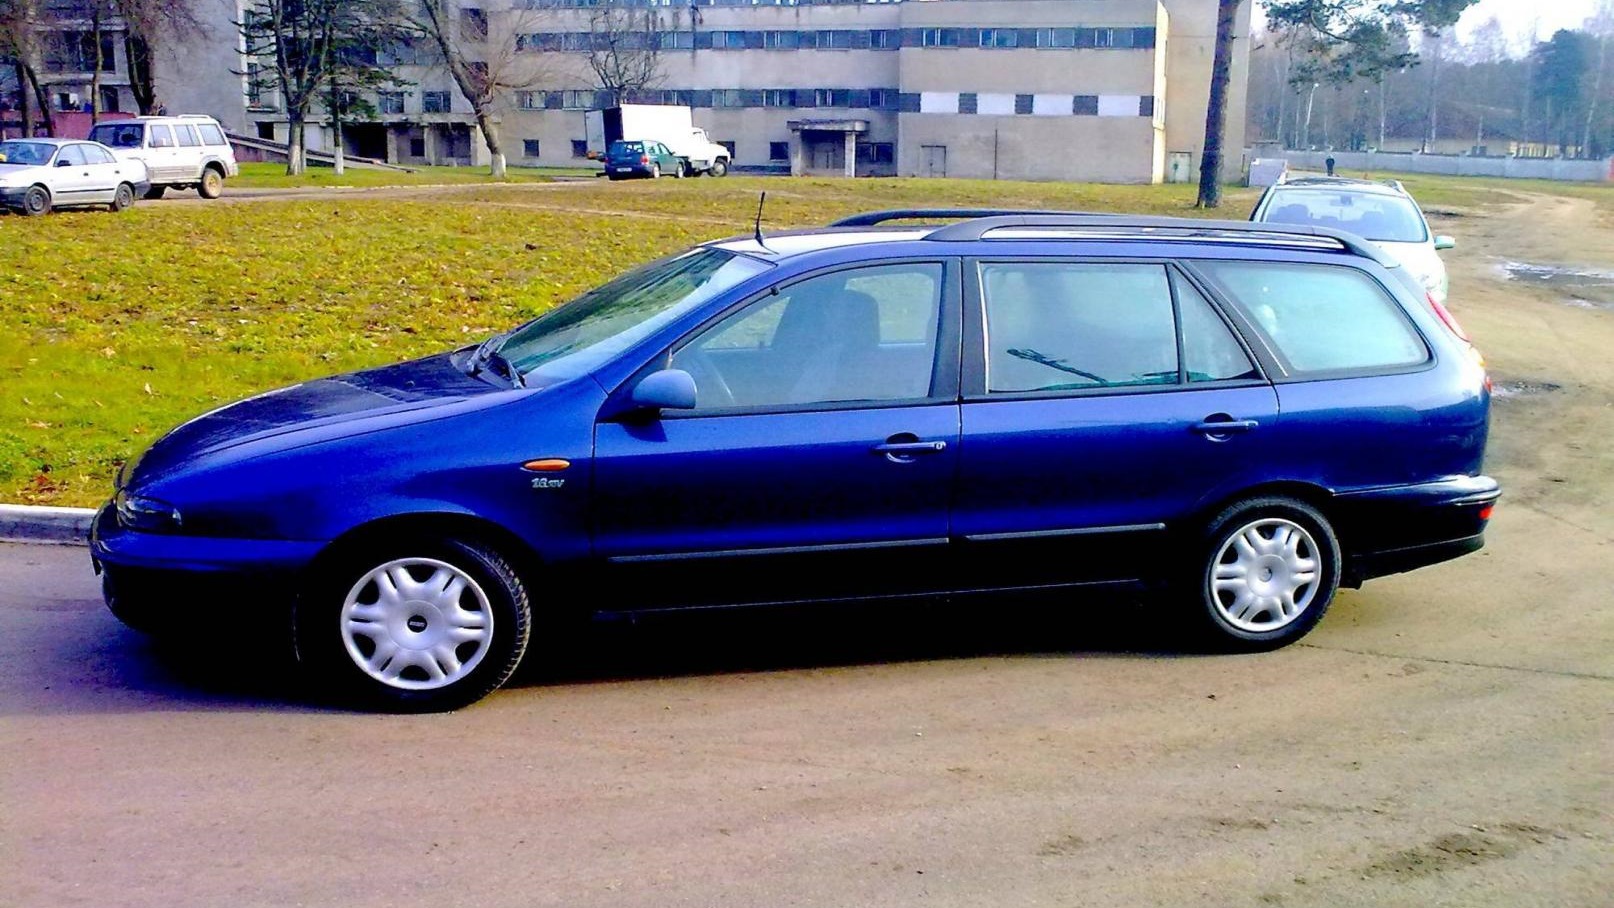 Фиат мареа универсал. Fiat Marea универсал. Fiat Marea универсал 2000. Fiat Marea 1997 г/в универсал. Фиат Мареа седан.